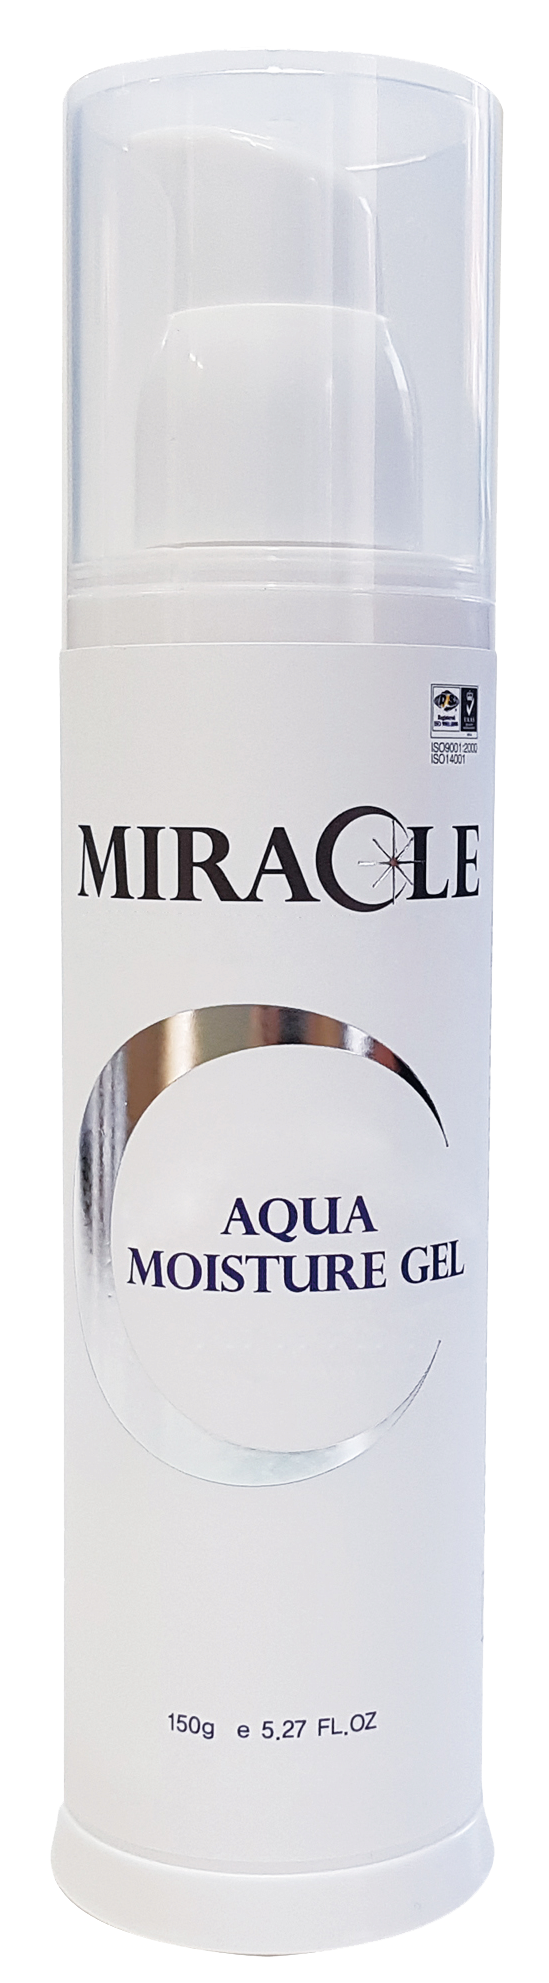 TOAS Miracle Aqua Moisture Gel 15Og